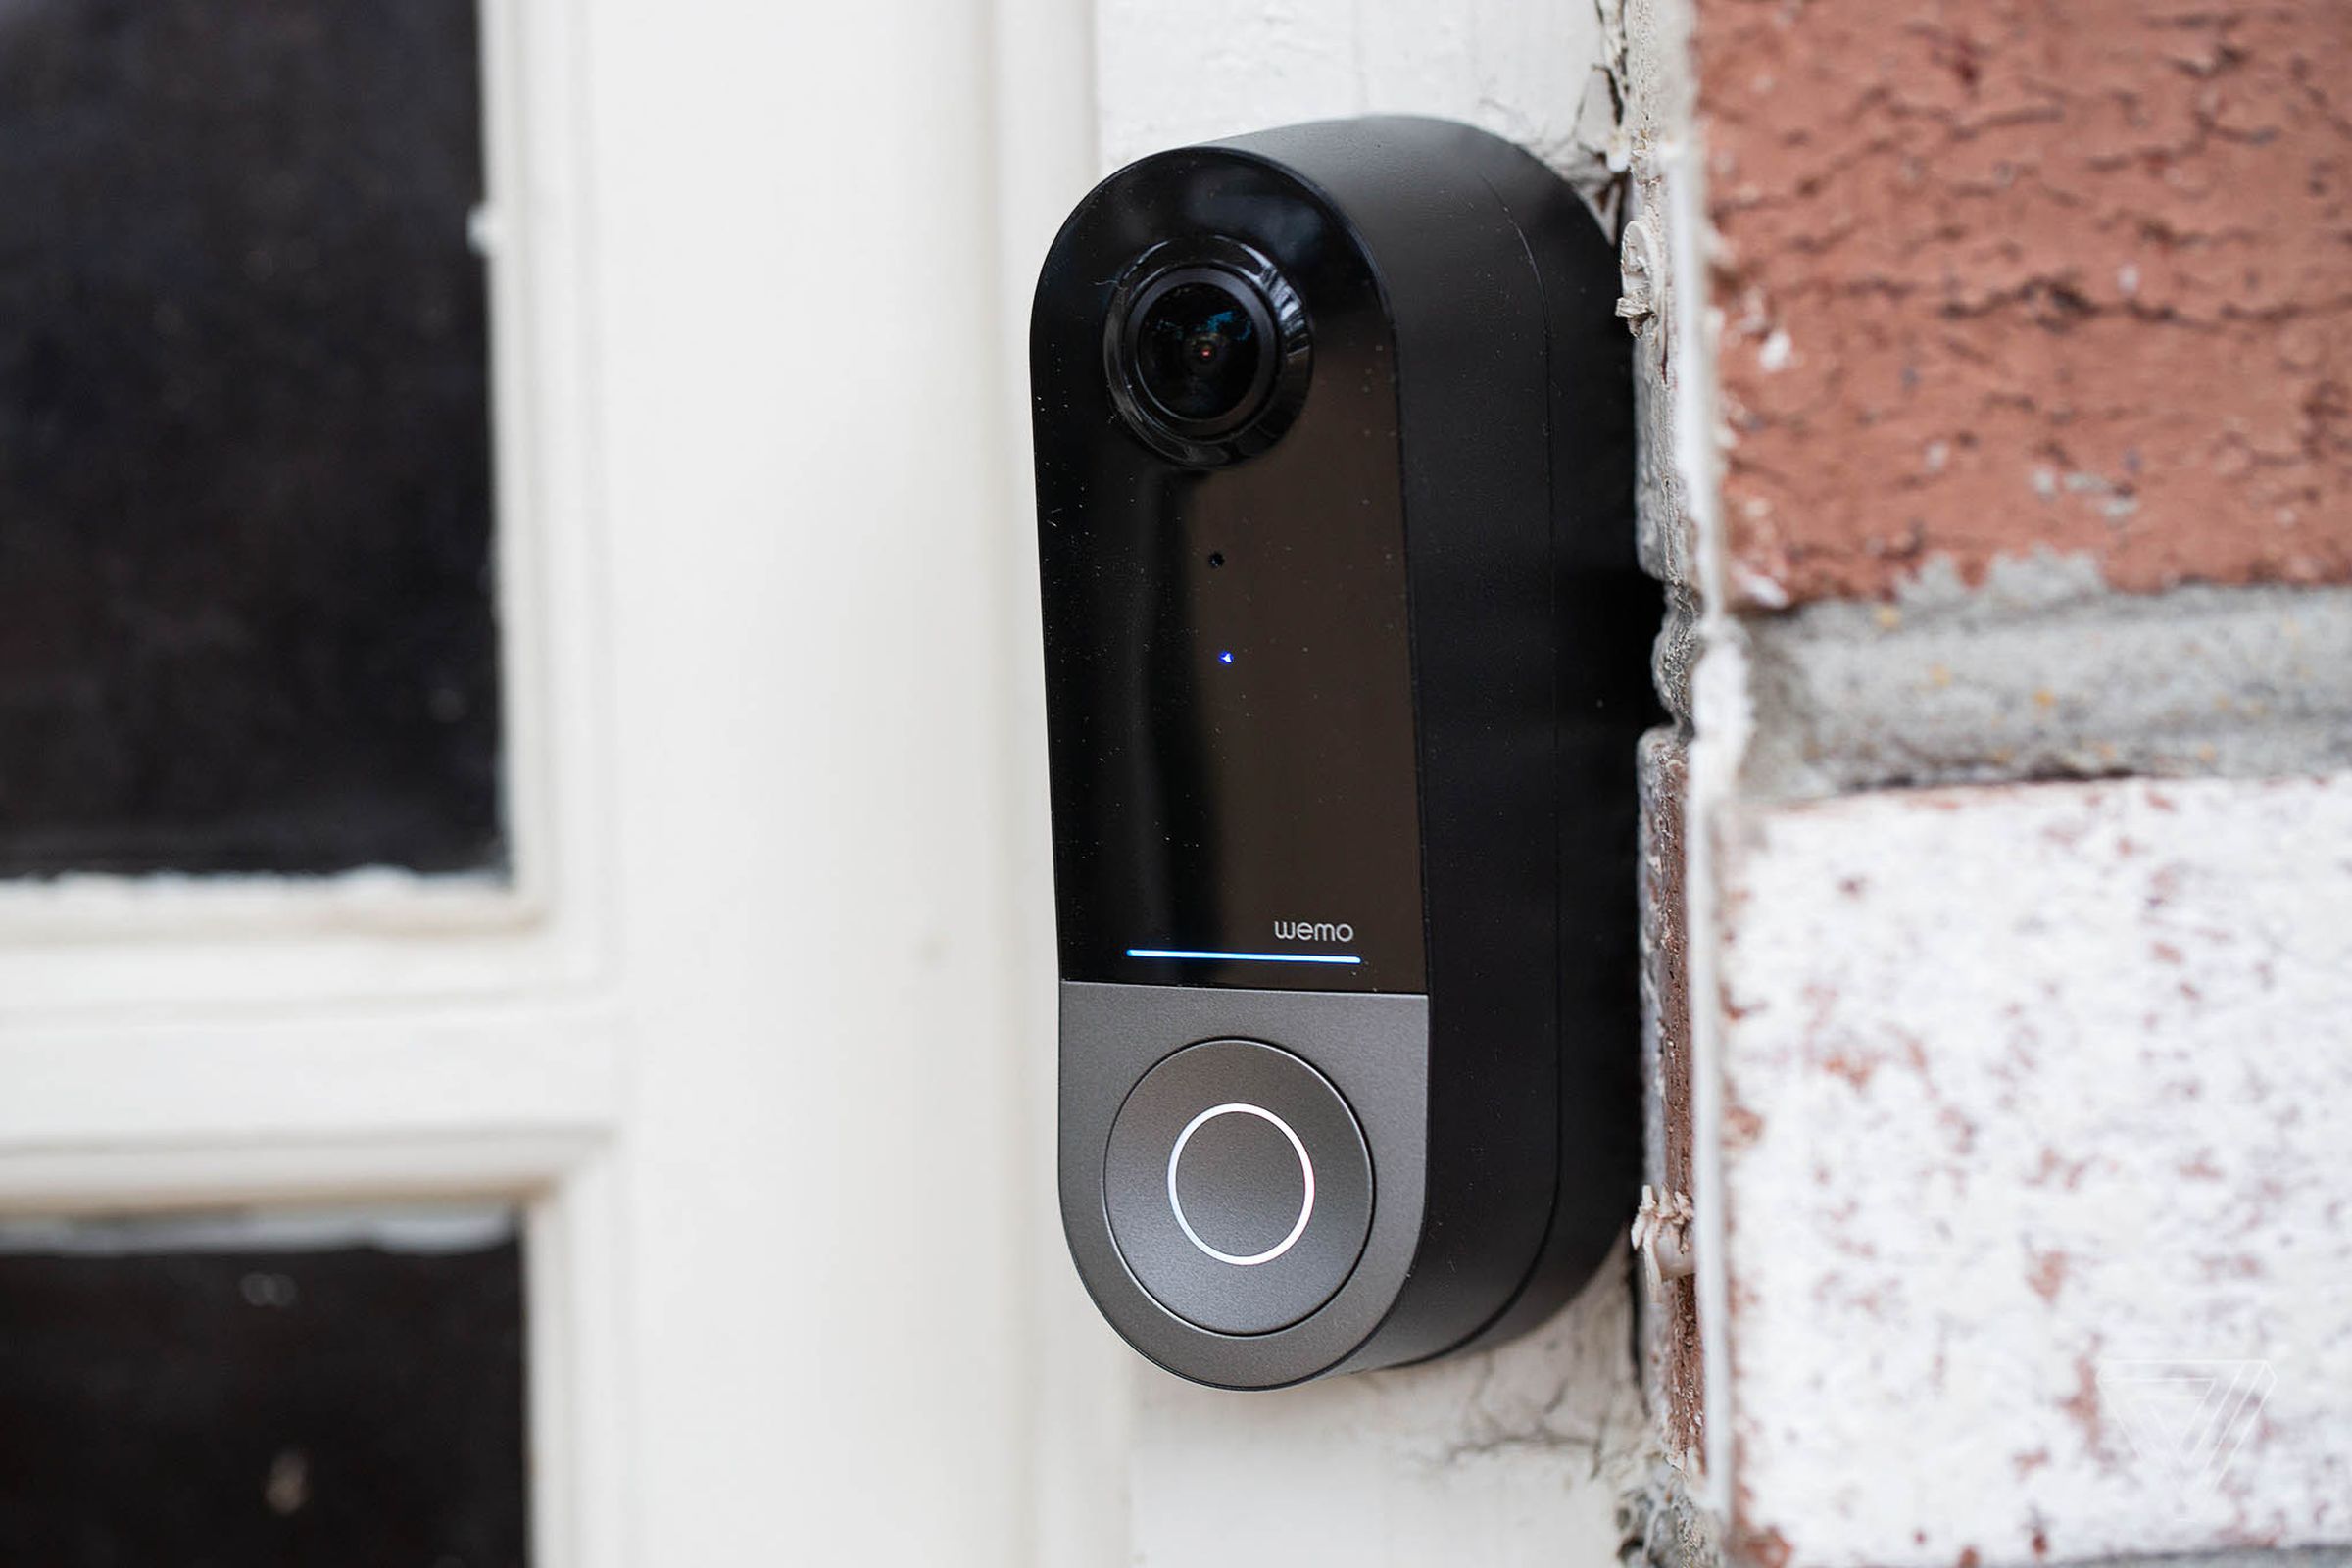 A close-up image of a doorbell camera.